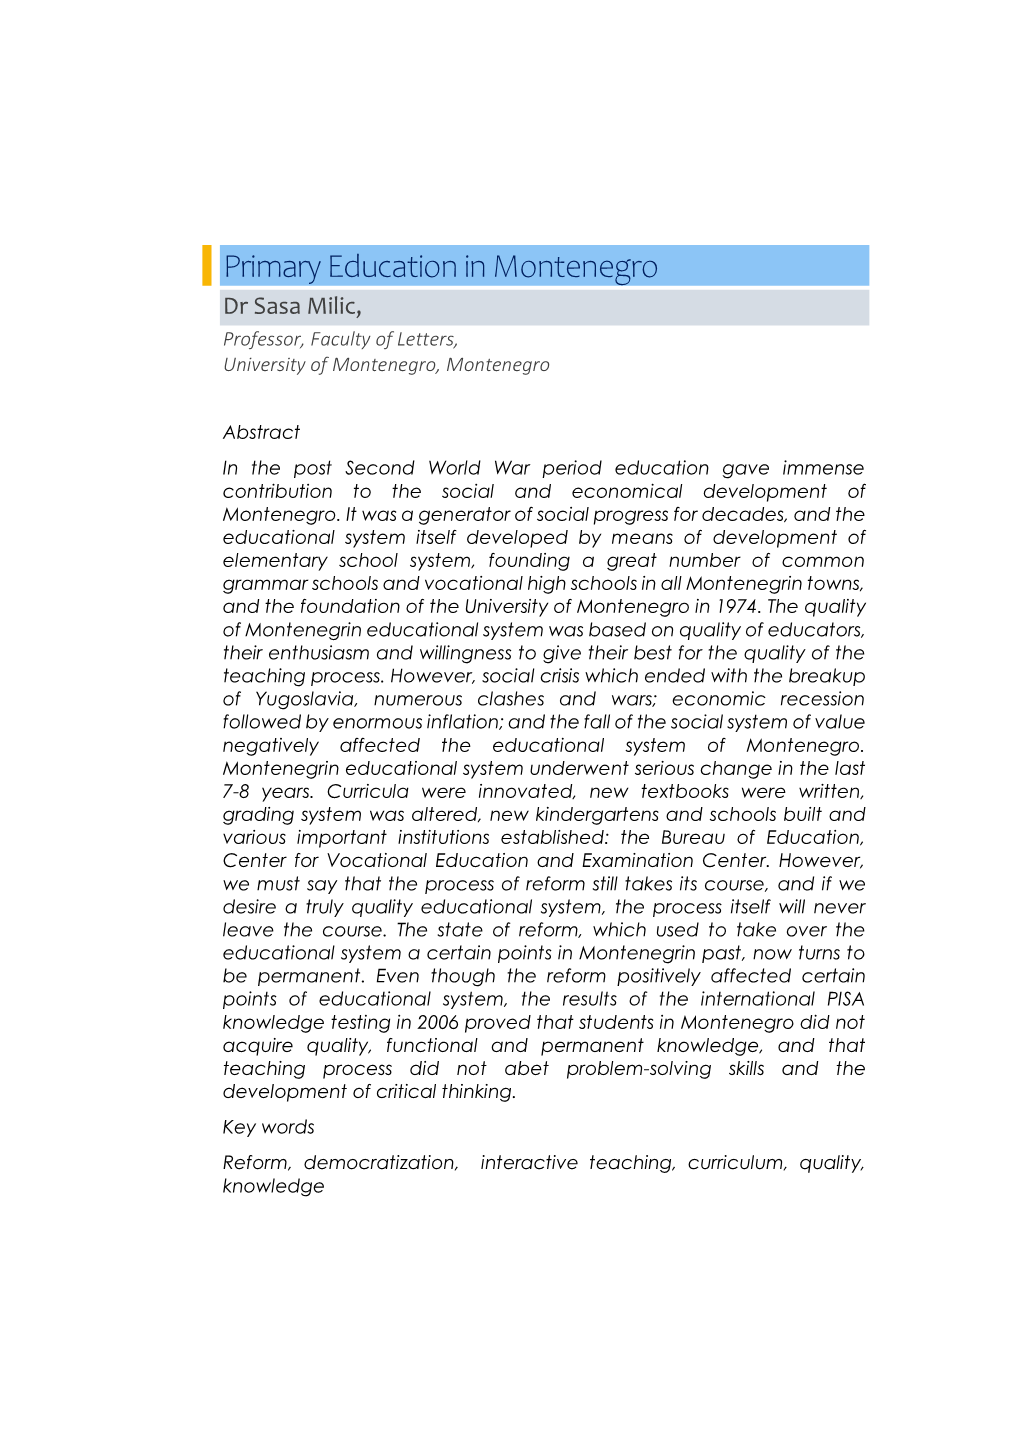 Primary Education in Montenegro Dr Sasa Milic, Professor, Faculty of Letters, University of Montenegro, Montenegro